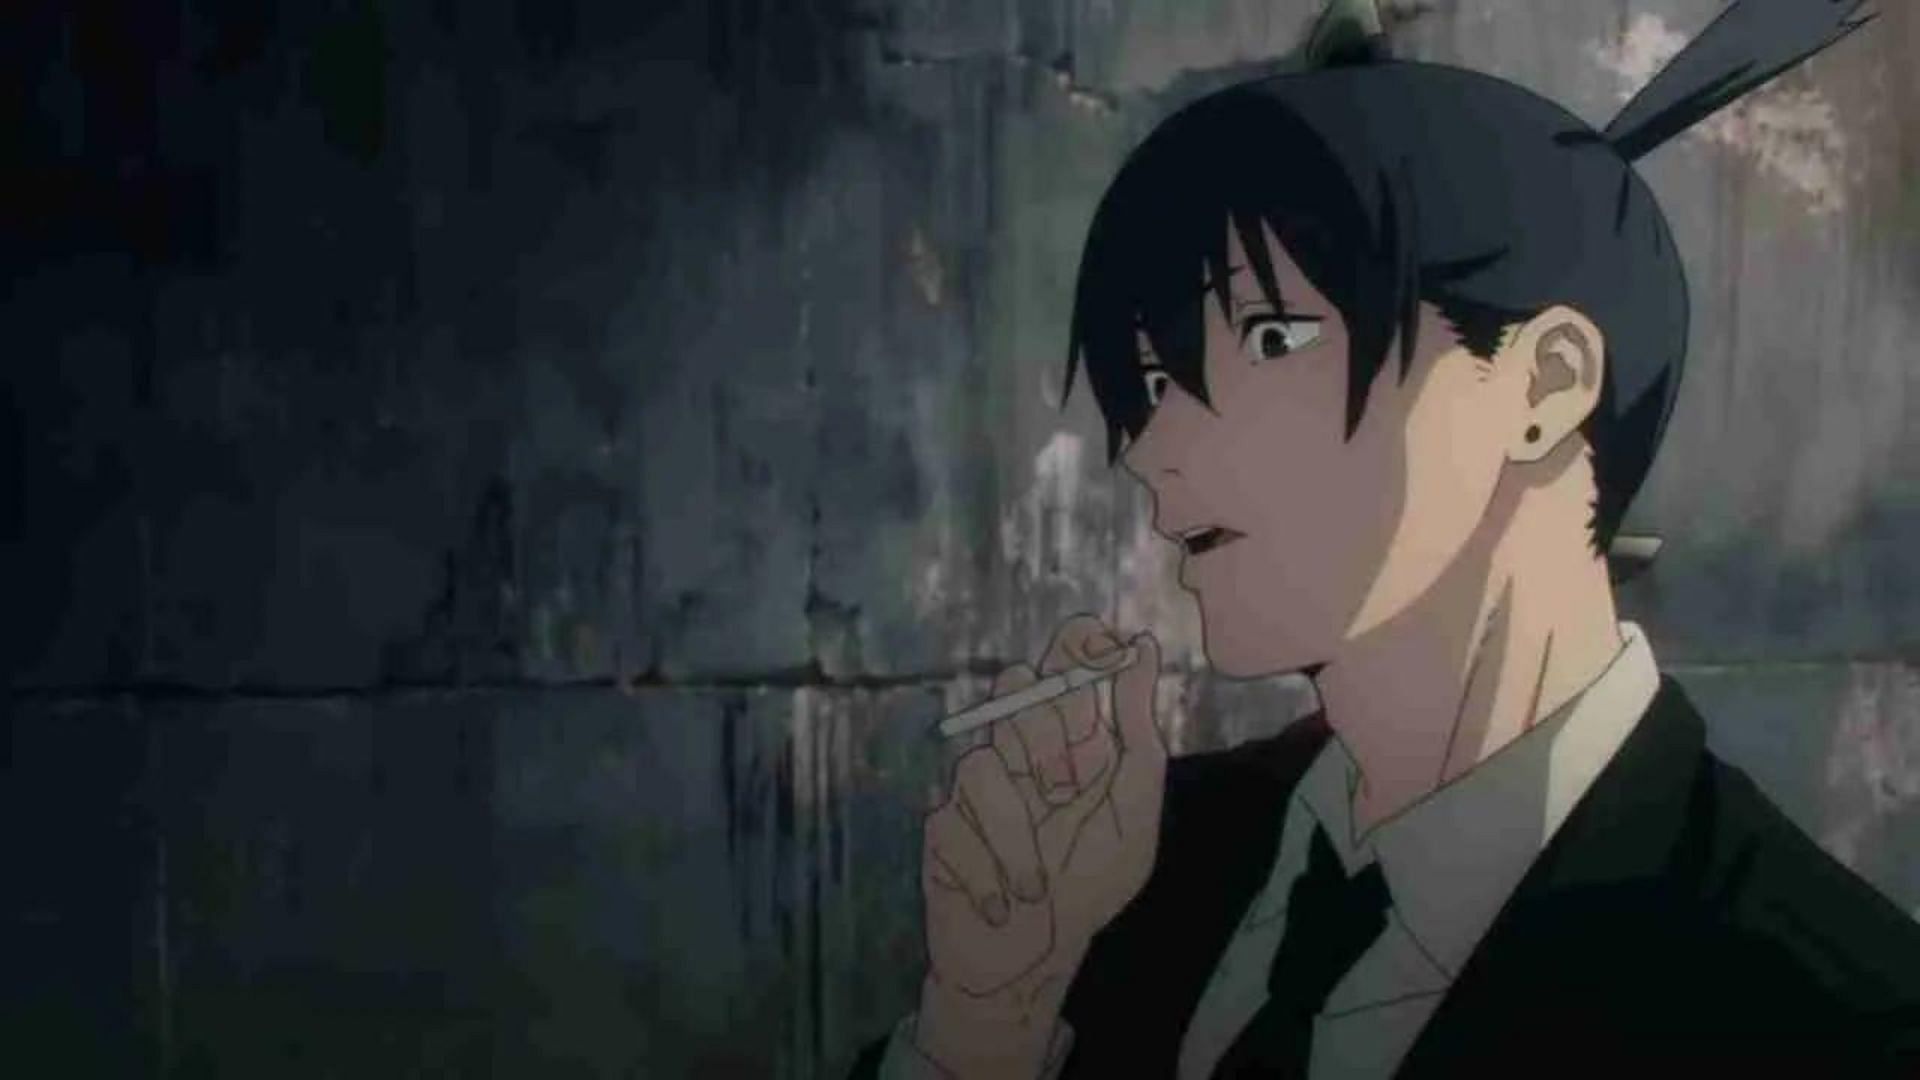 Download Anime Guy Smoking As Instagram PFP Wallpaper | Wallpapers.com